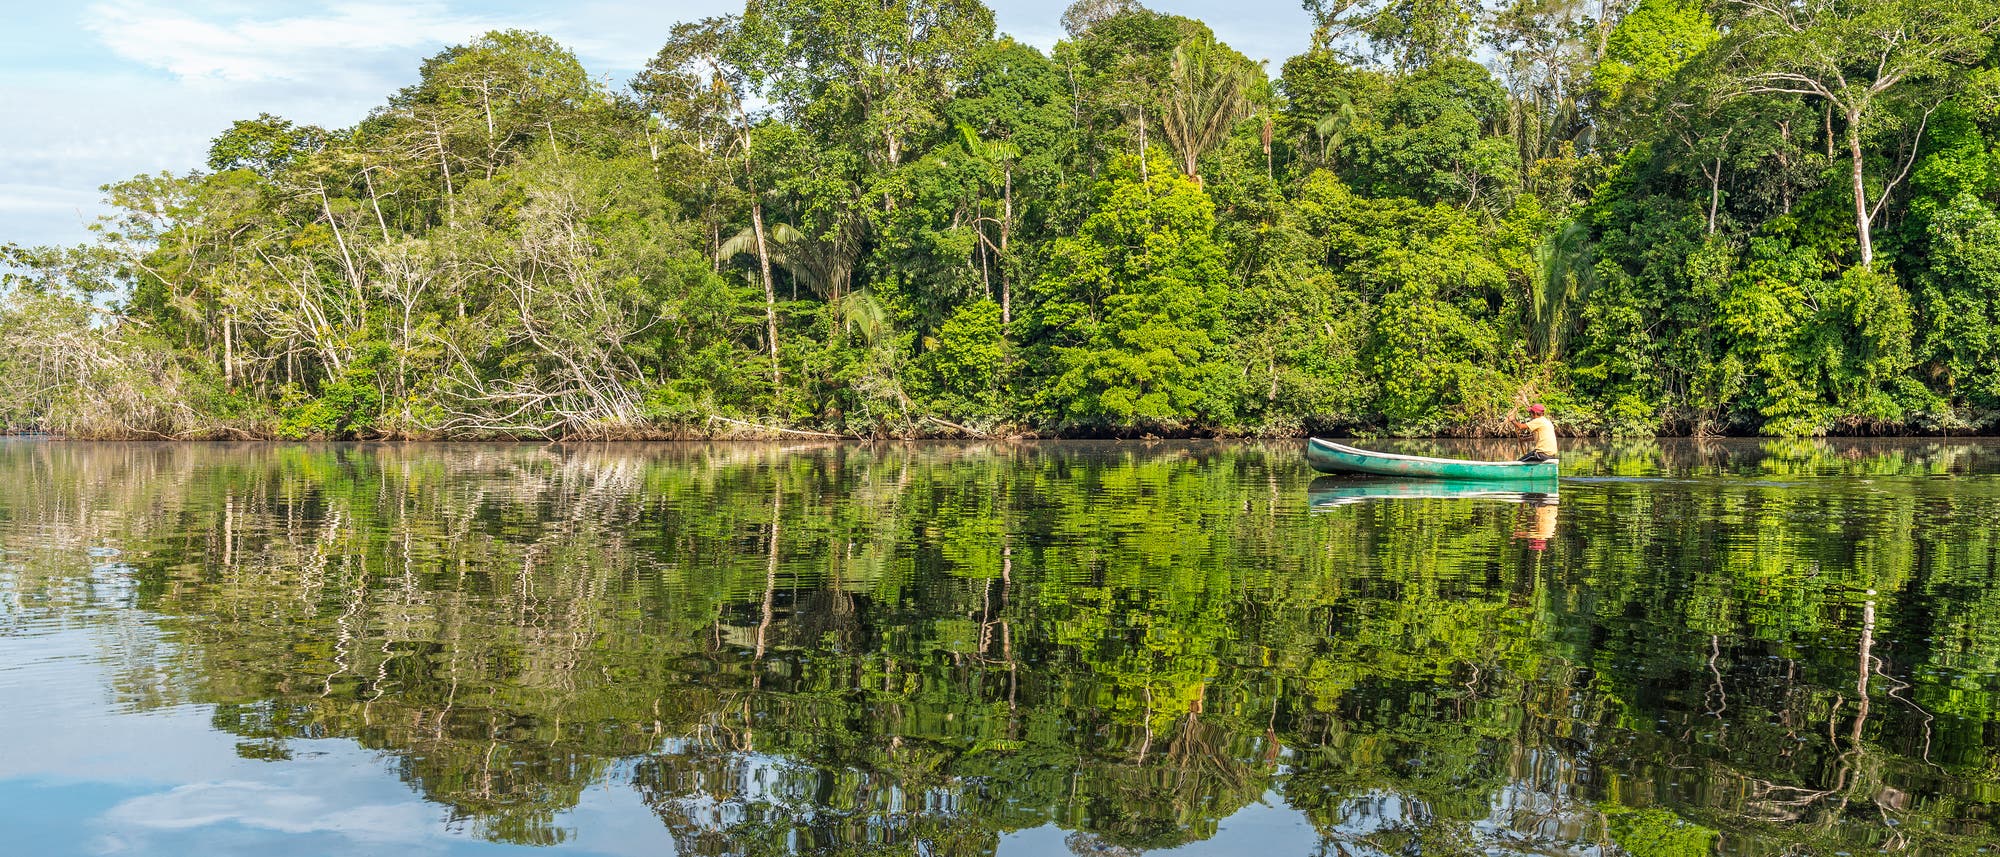 Mit dem Kanu auf dem Amazonas